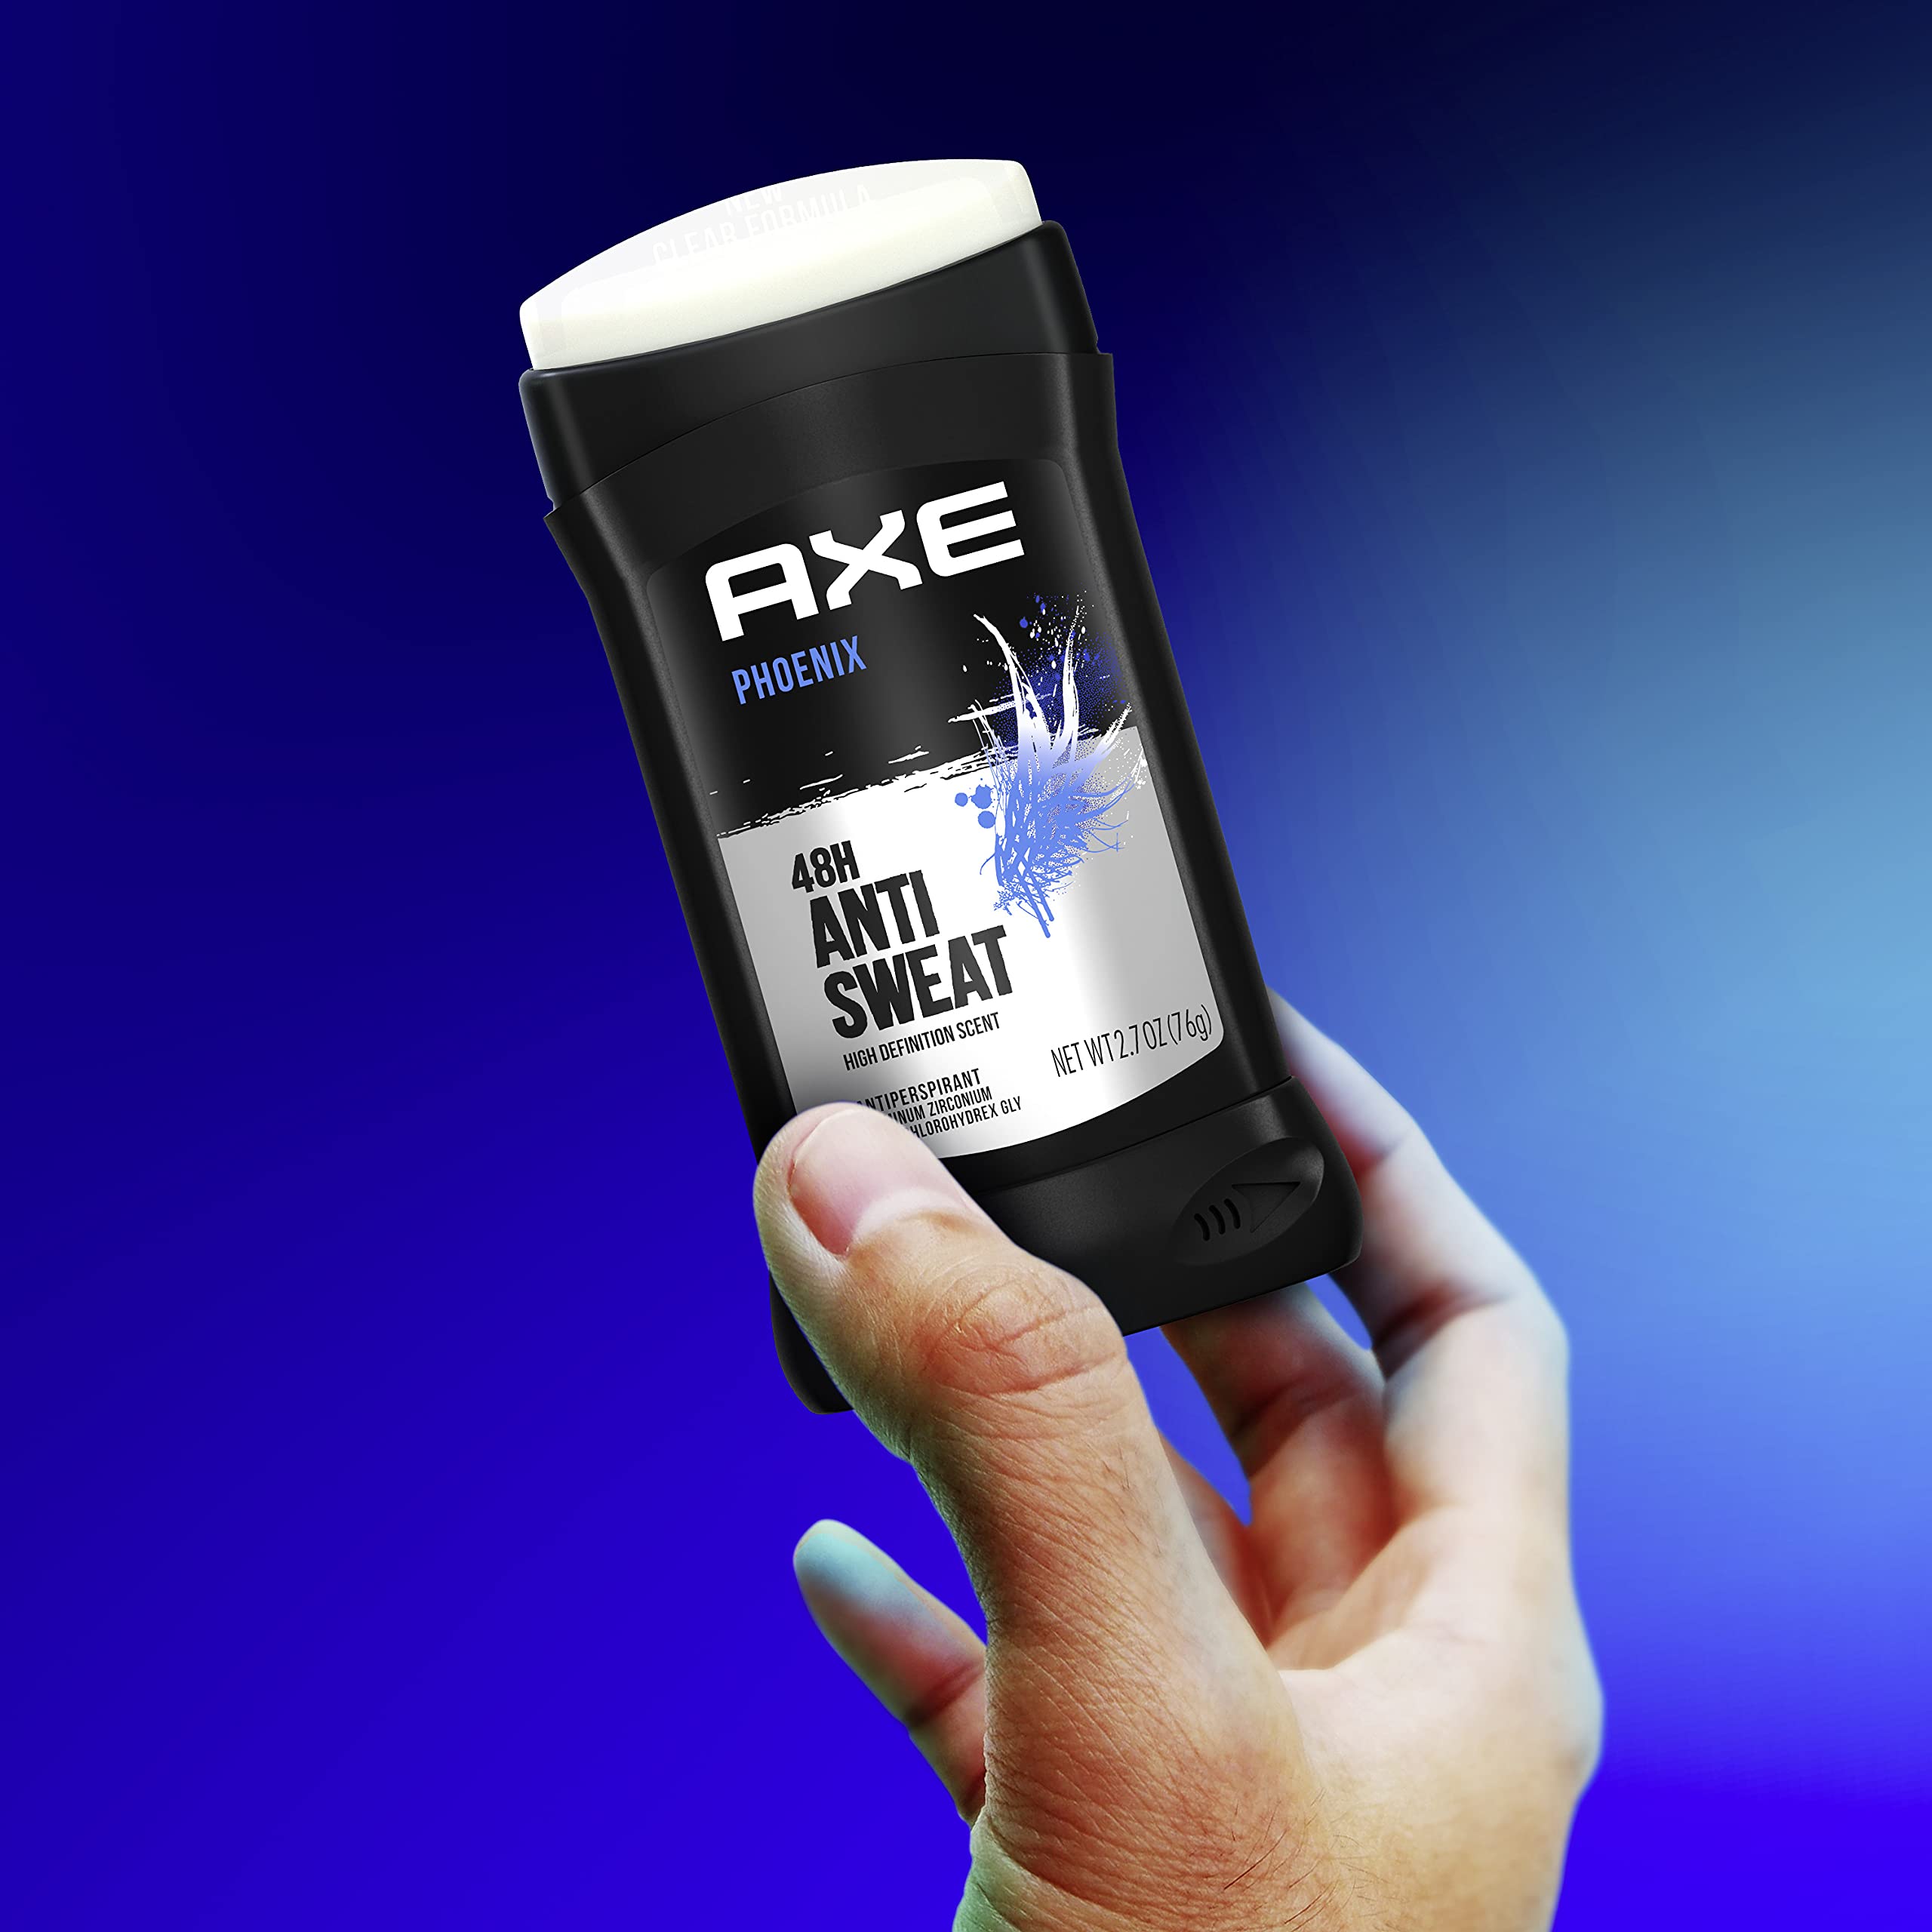 AXE Phoenix 48H Anti Sweat High Definition Scent Men's Antiperspirant Deodorant, 2.7 oz - image 5 of 10